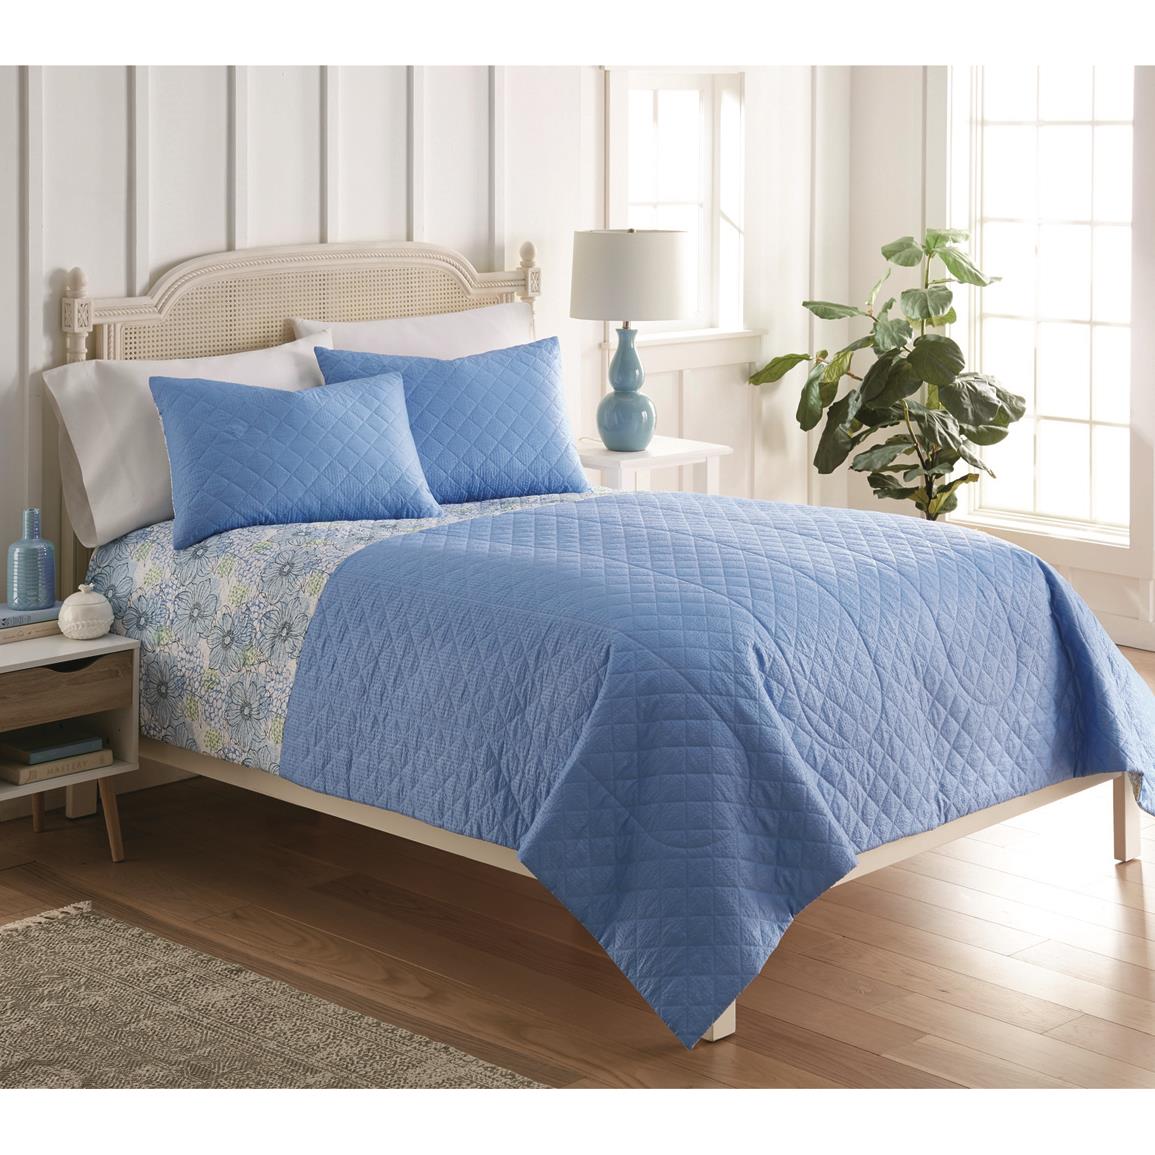 Shavel Home Products Seersucker 6-in-1 Quilt Set, Blue Poppies